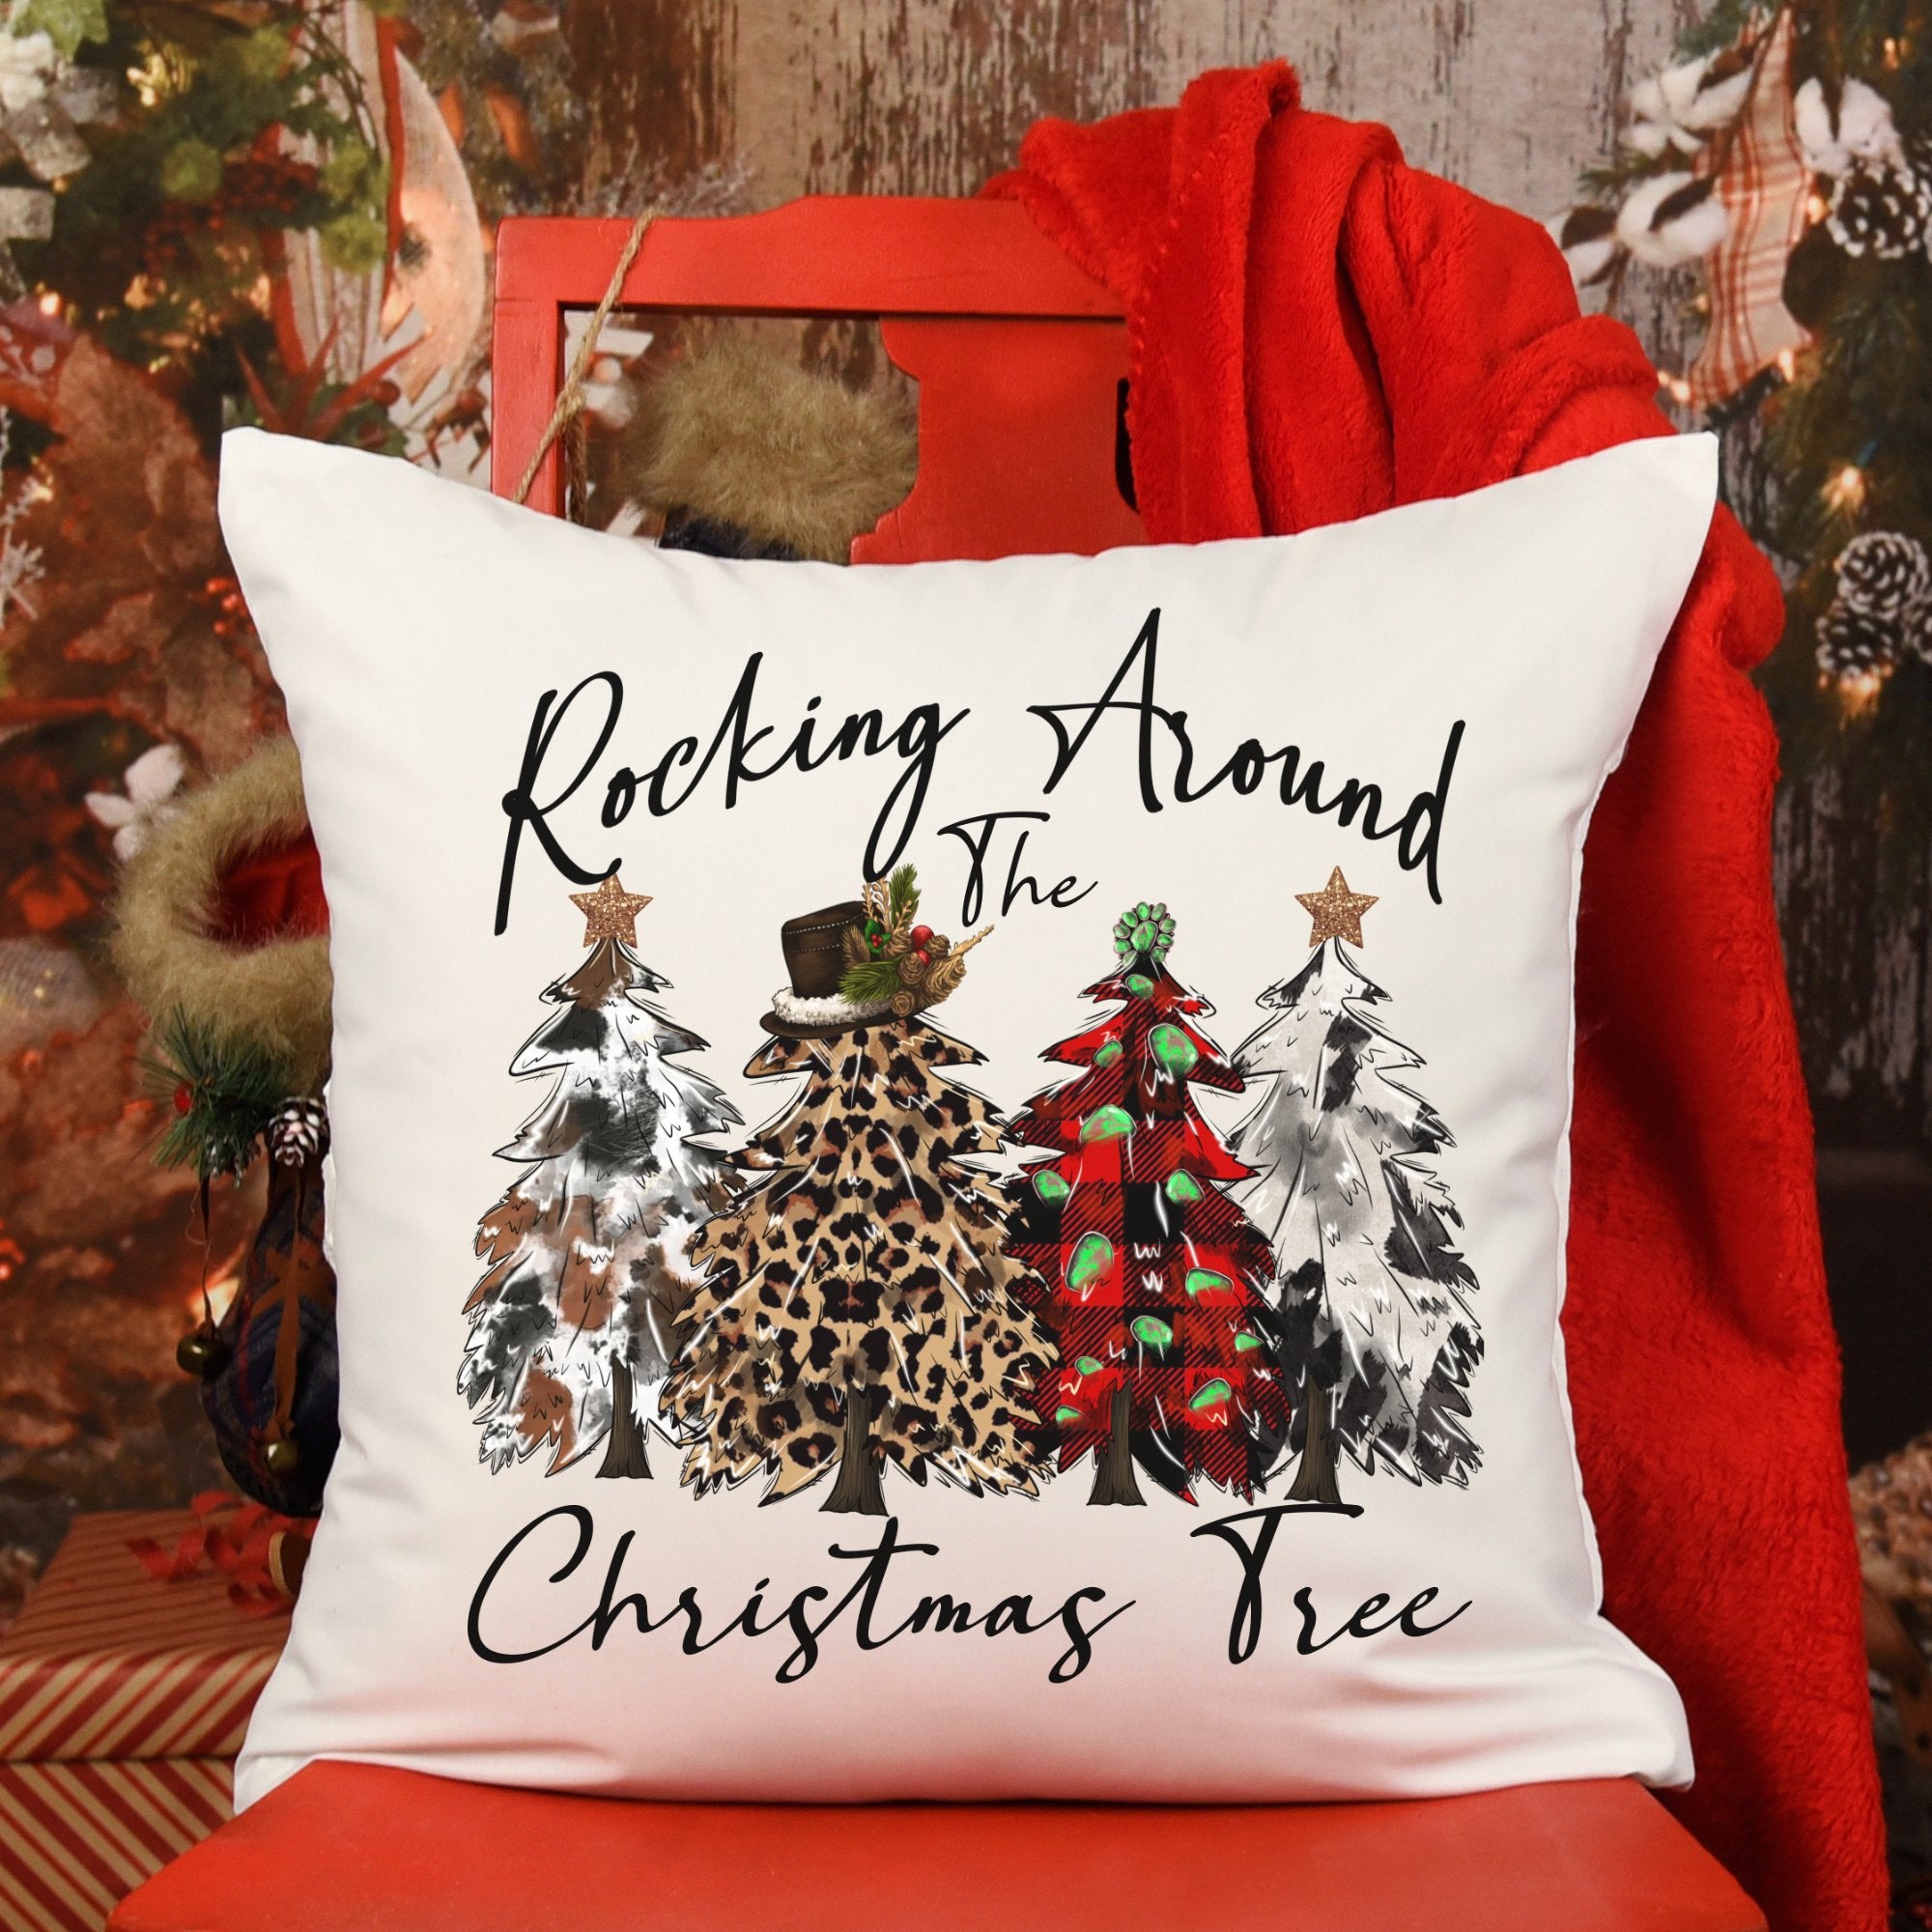 Rocking Around The Christmas Tree Christmas Pillow Cover - Trendznmore